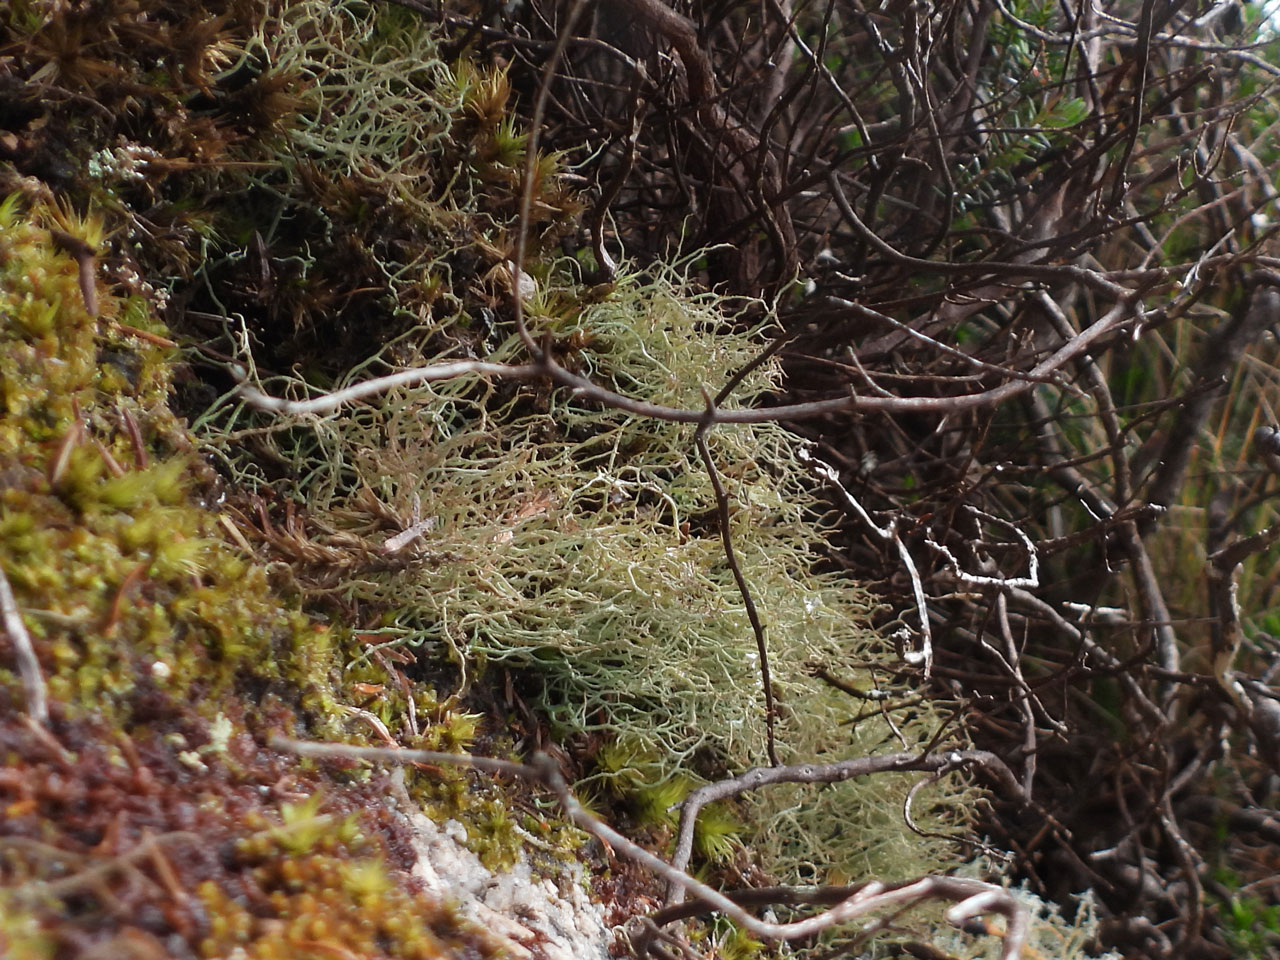 Cladonia stereoclada, Hannibal's Carn, West Cornwall